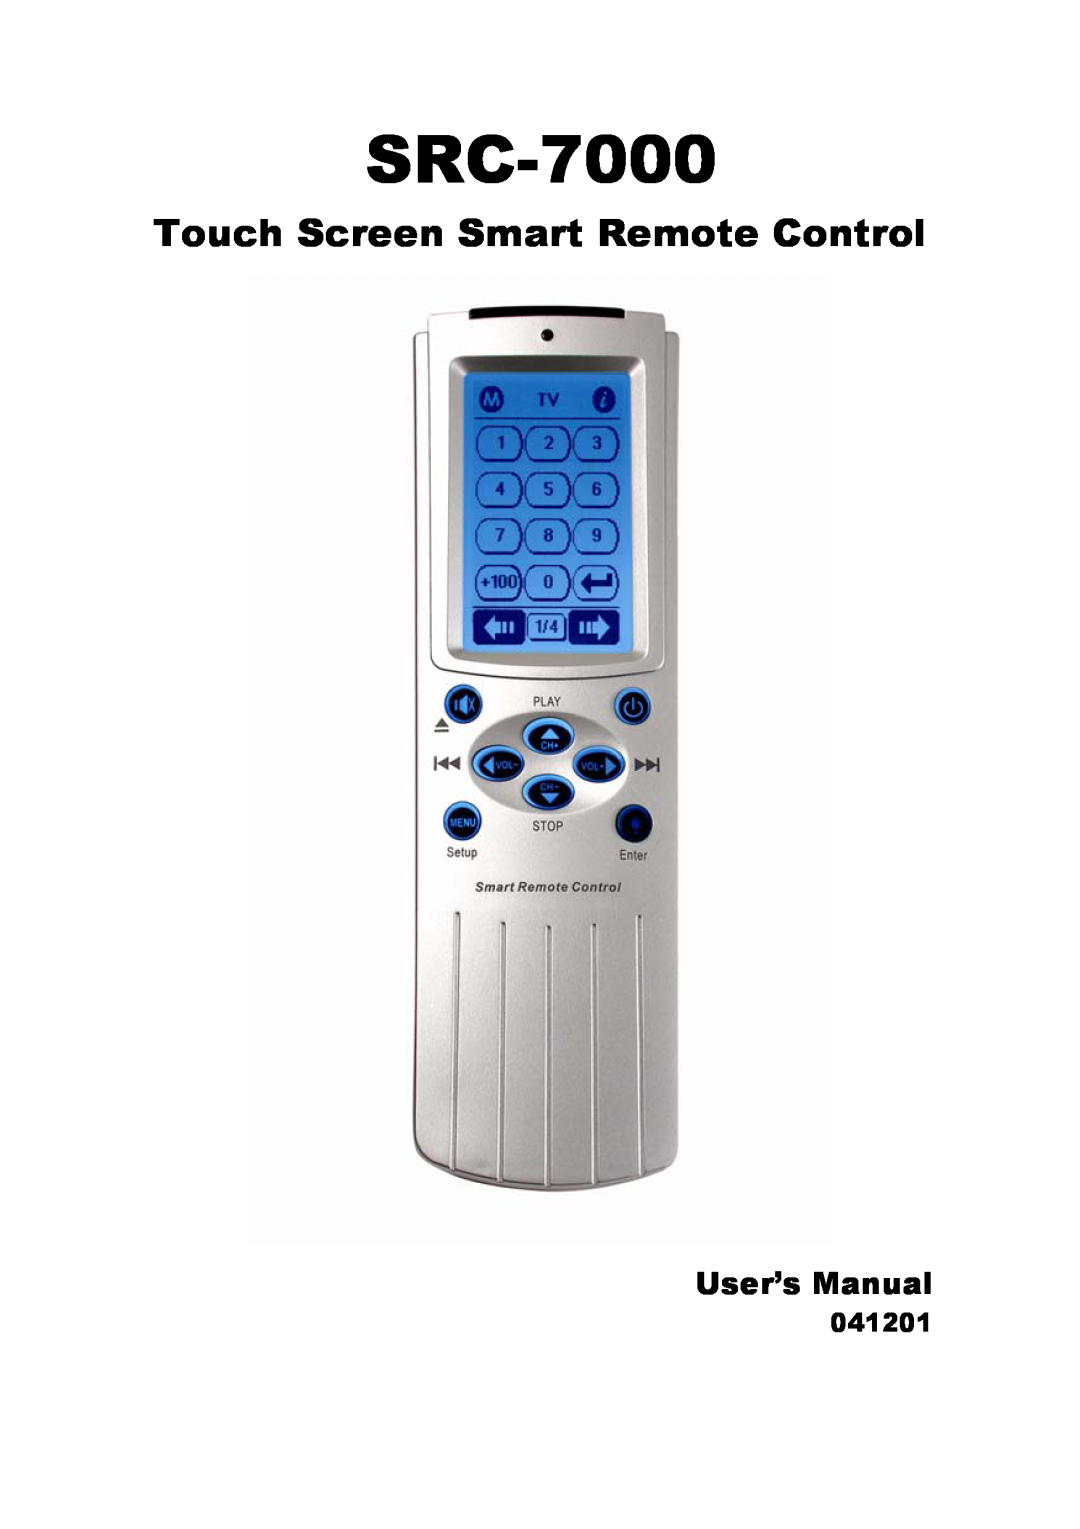 Sunwave Tech SRC-7000 manual Touch Screen Smart Remote Control, User’s Manual, 041201 